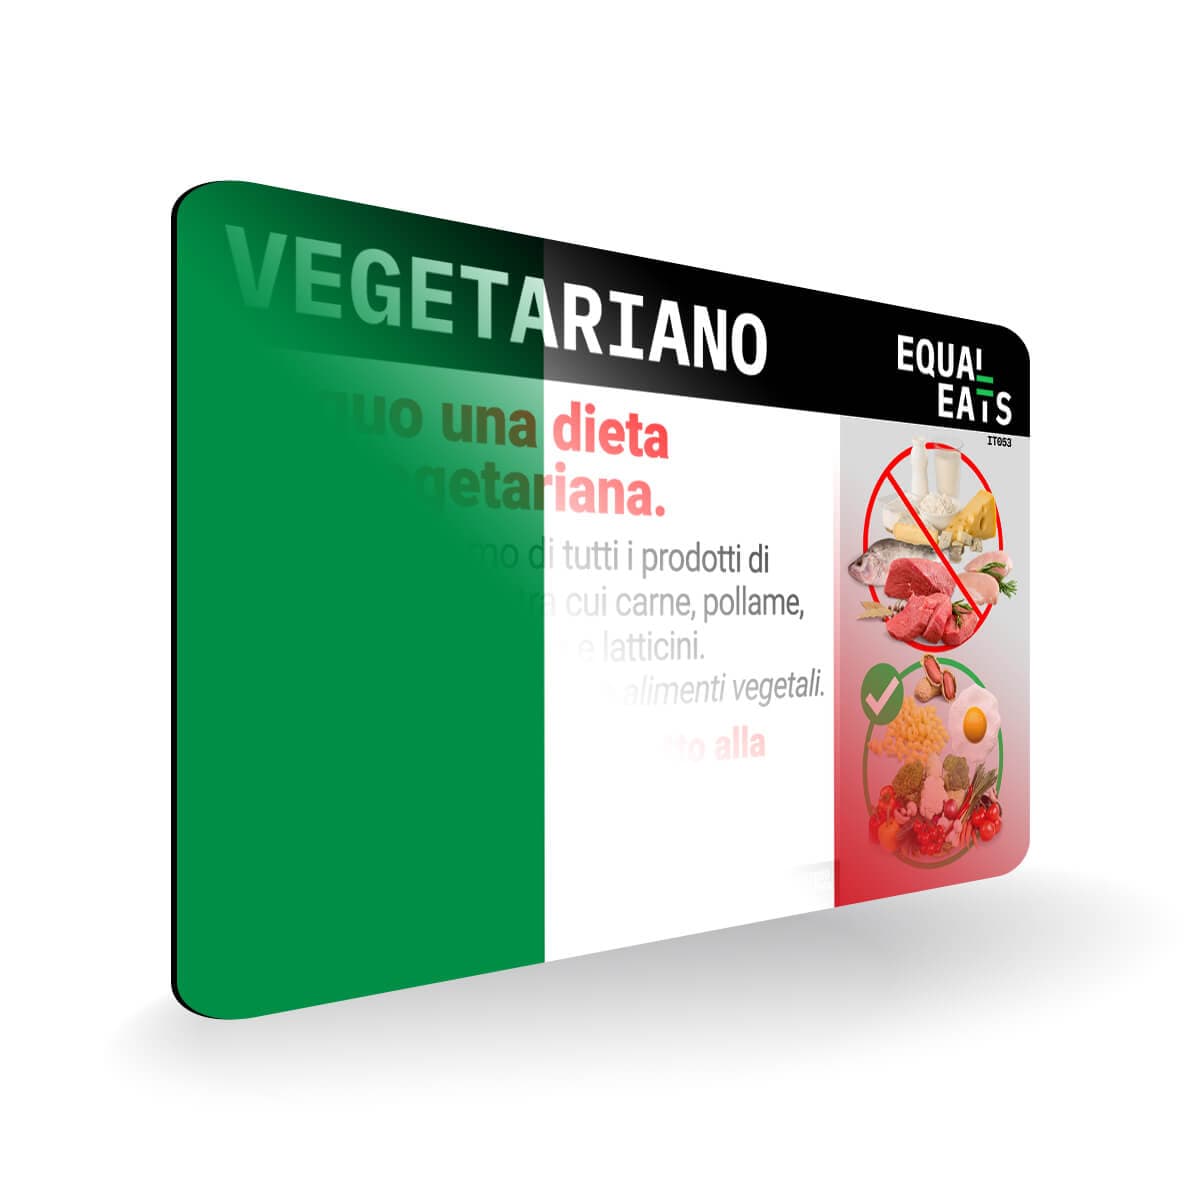 Ovo Vegetarian in Italian. Card for Vegetarian in Italy